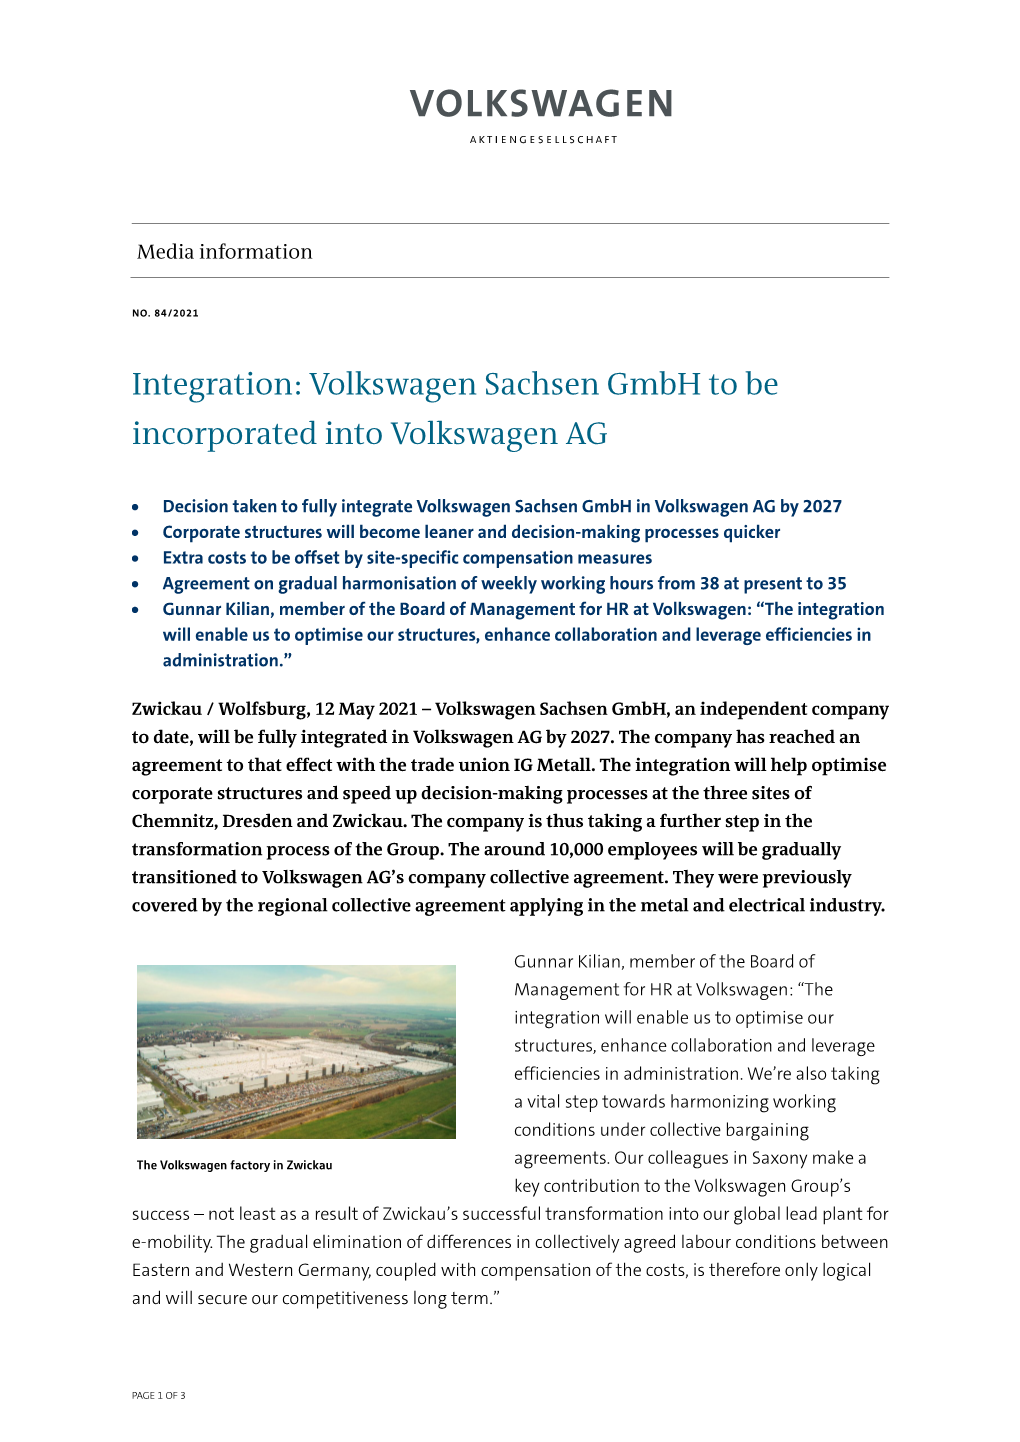 Integration: Volkswagen Sachsen Gmbh to Be Incorporated Into Volkswagen AG